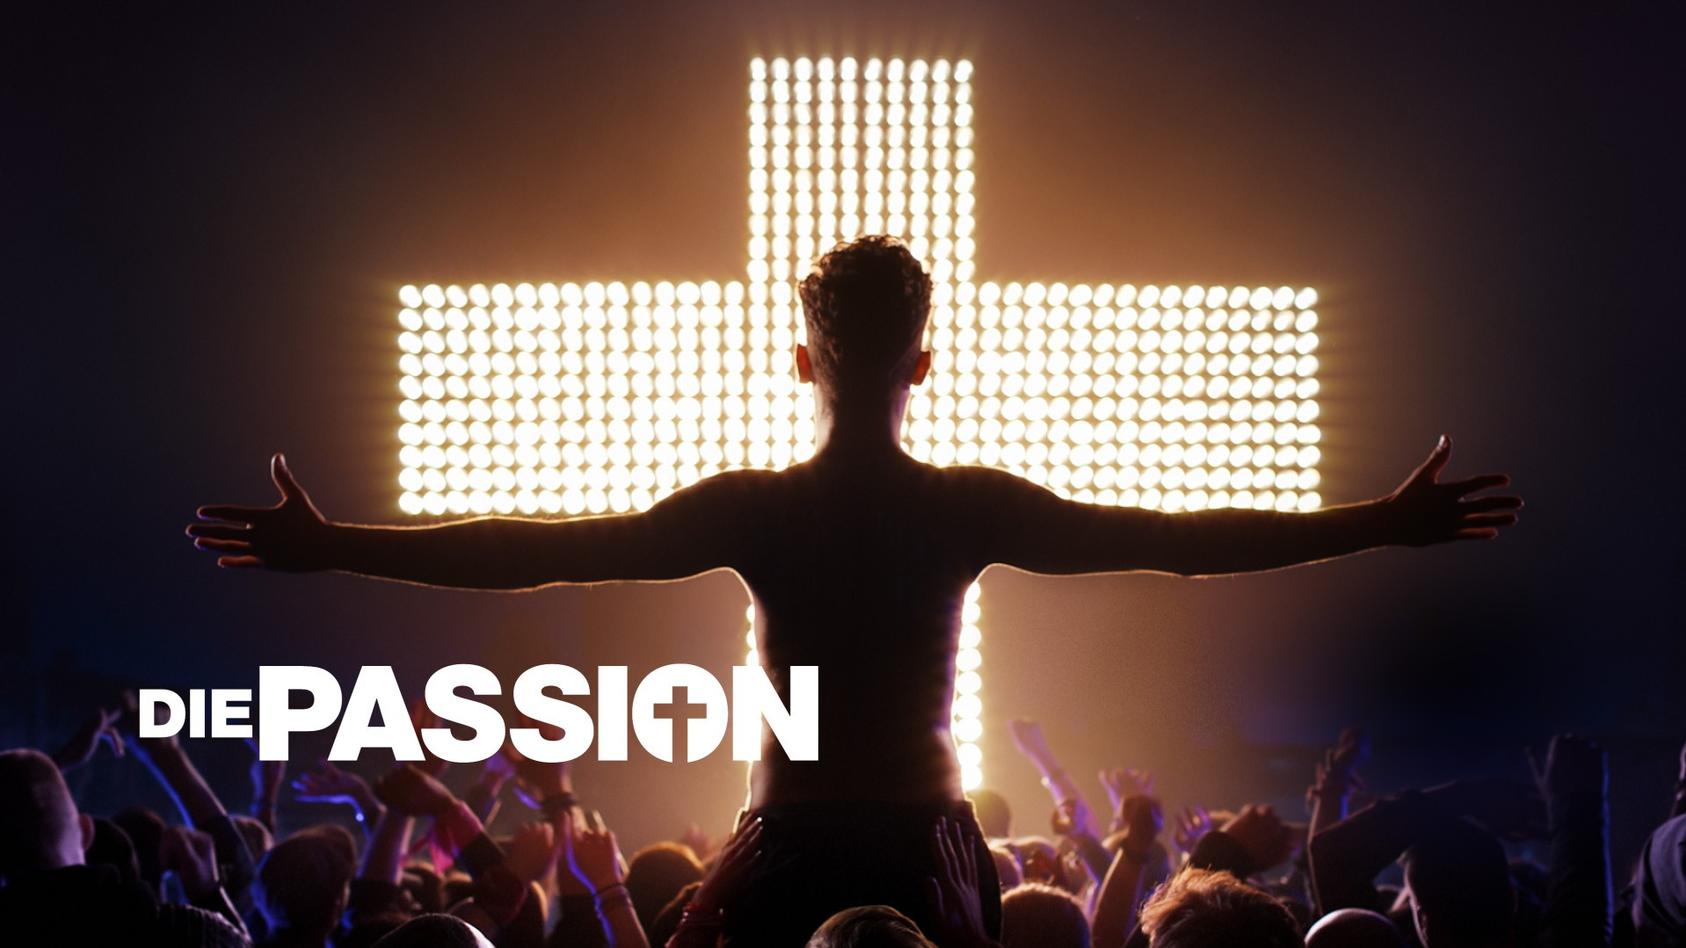 "Die Passion"